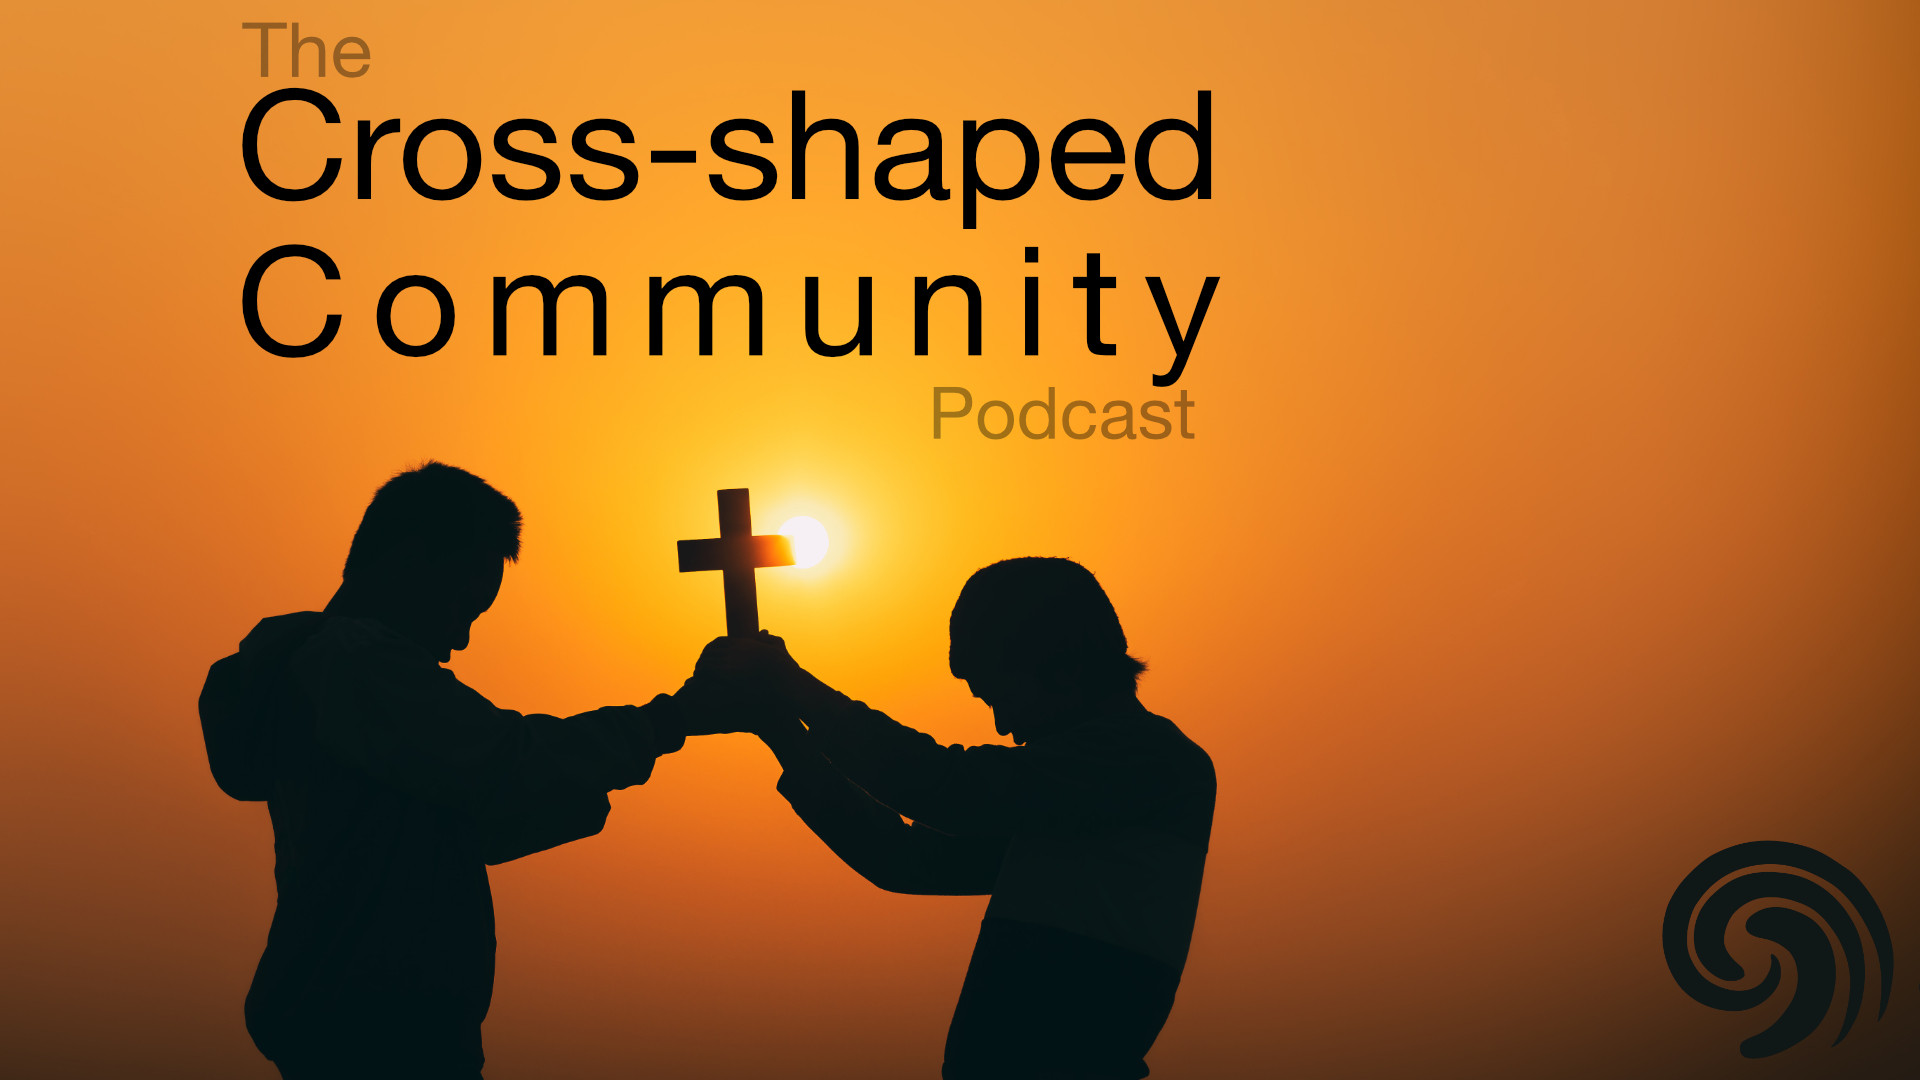 Cross-shaped community defined Image